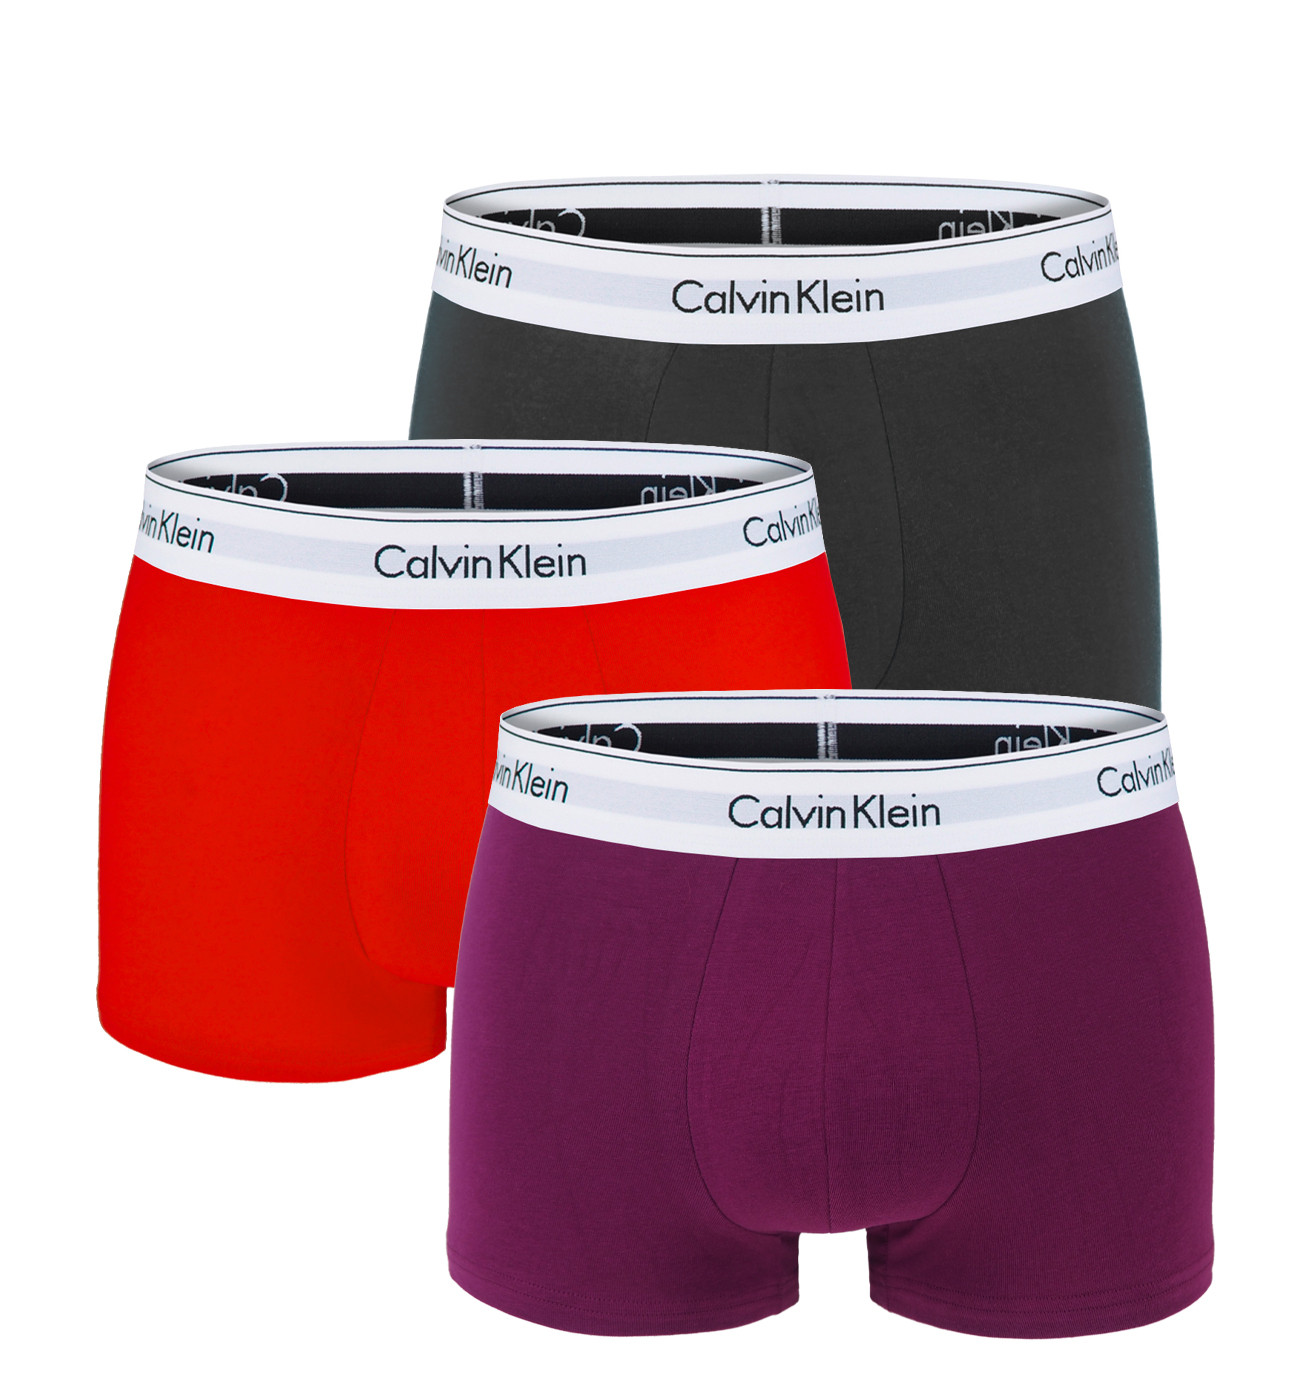 Calvin Klein - boxerky 3PACK modern cotton stretch purple & gray color - limitovaná edícia